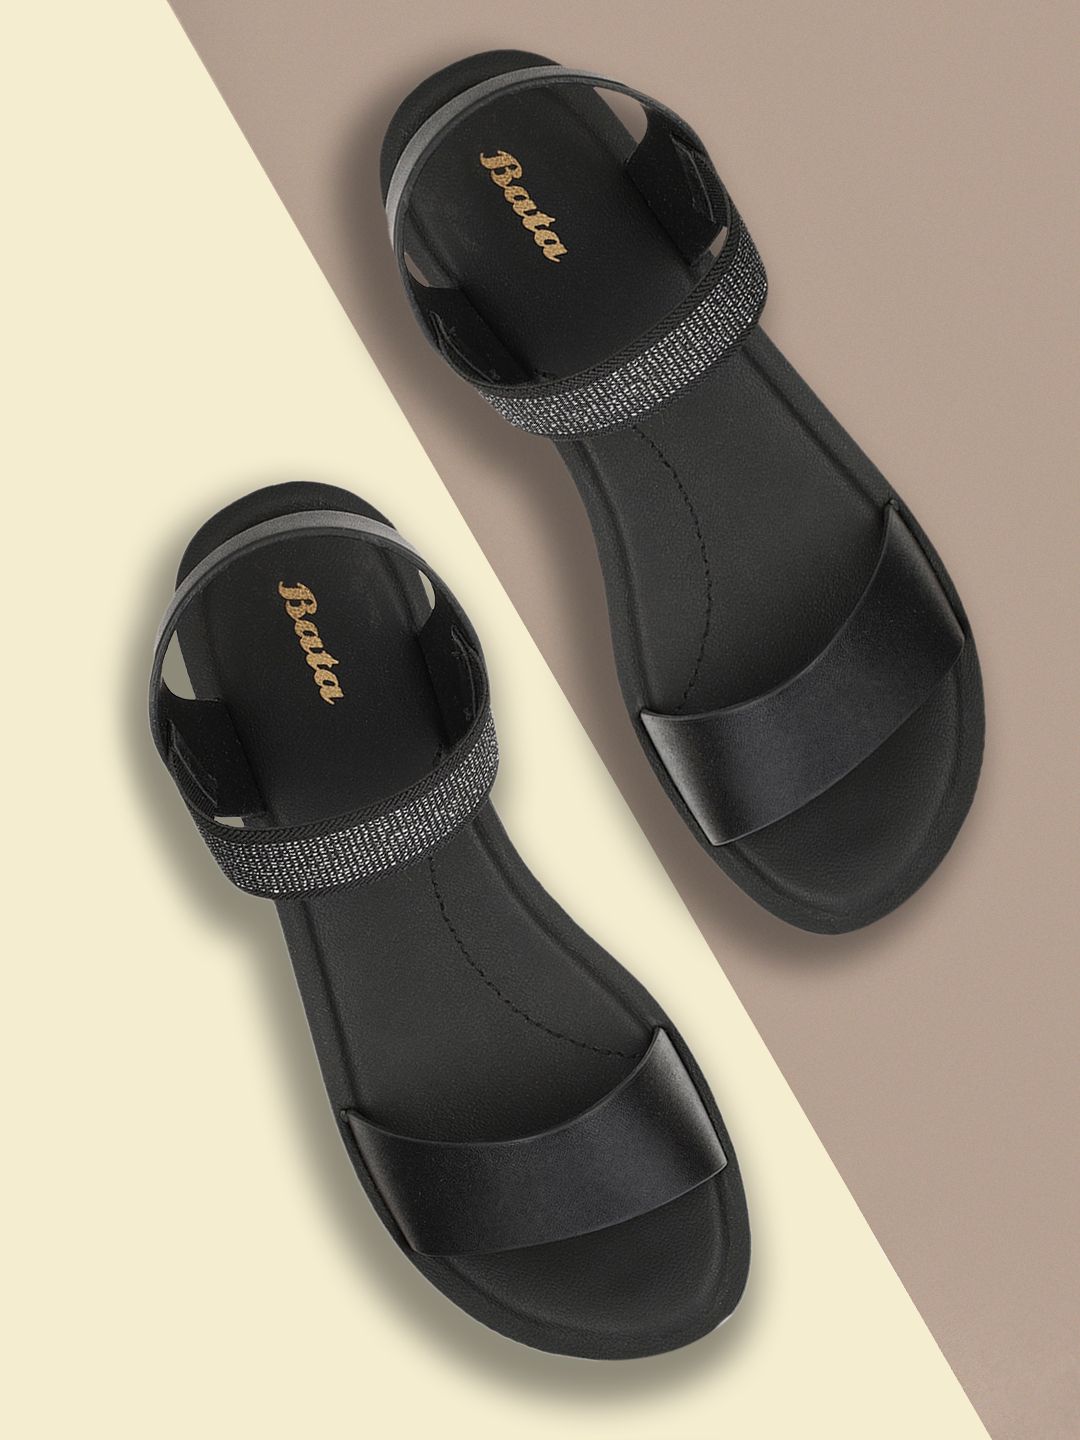 Bata Black Embellished Wedge Sandals Price in India